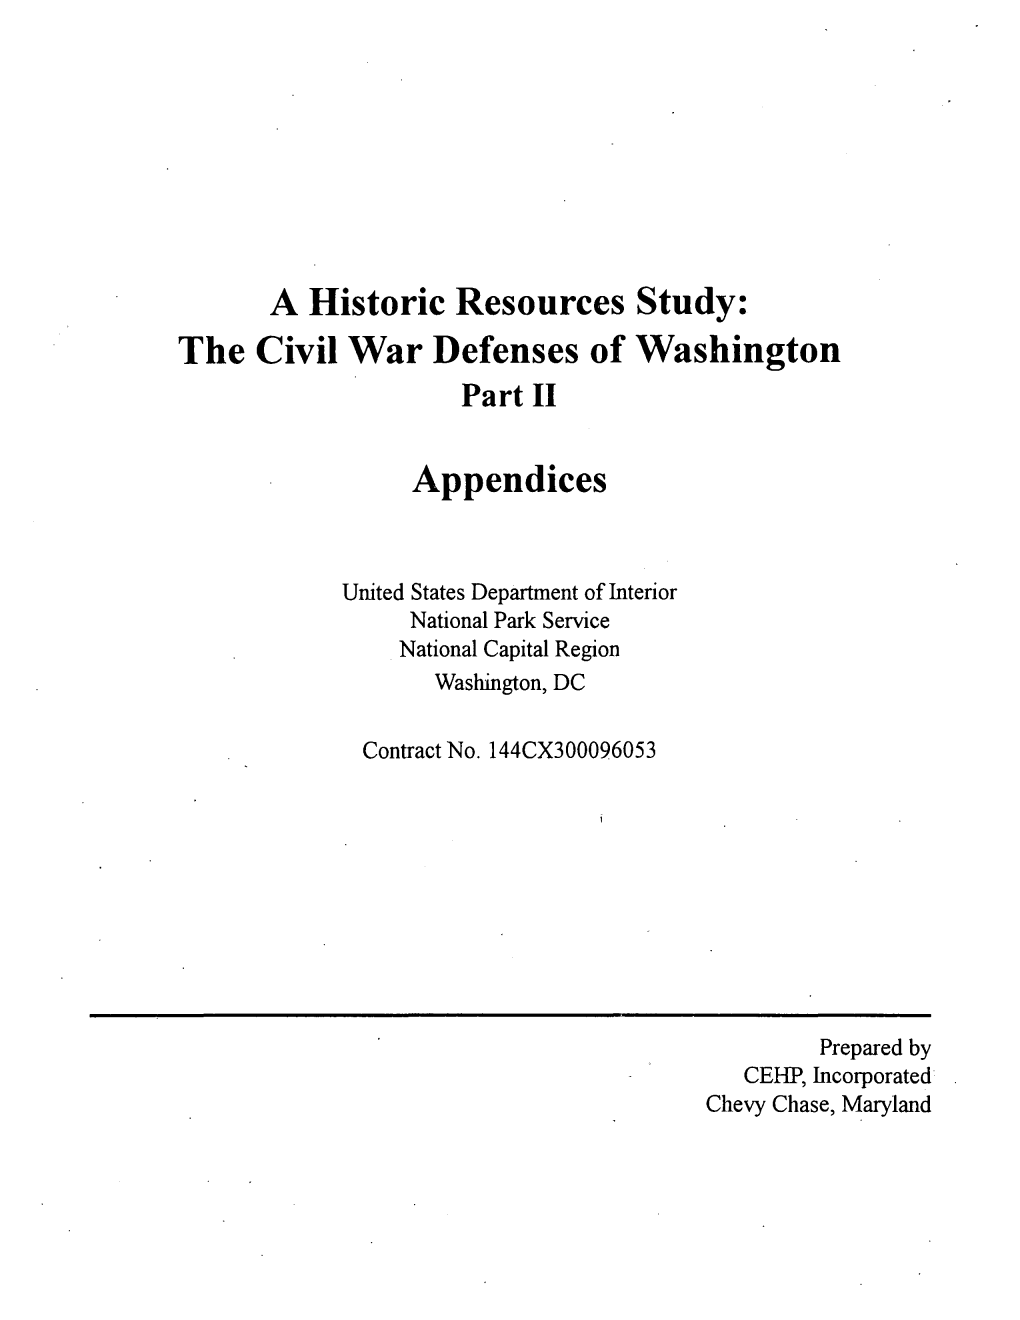 The Civil War Defenses of Washington Part II Appendices